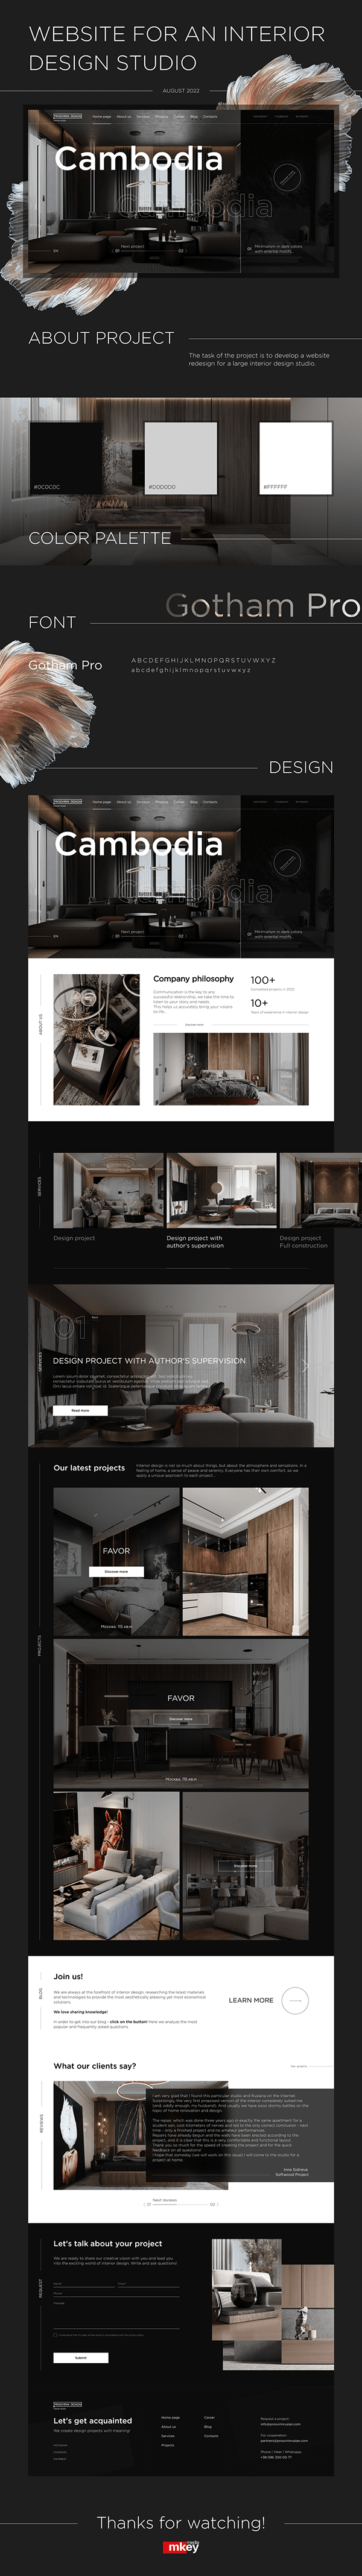 Website for an interior design studio UX/UI Design